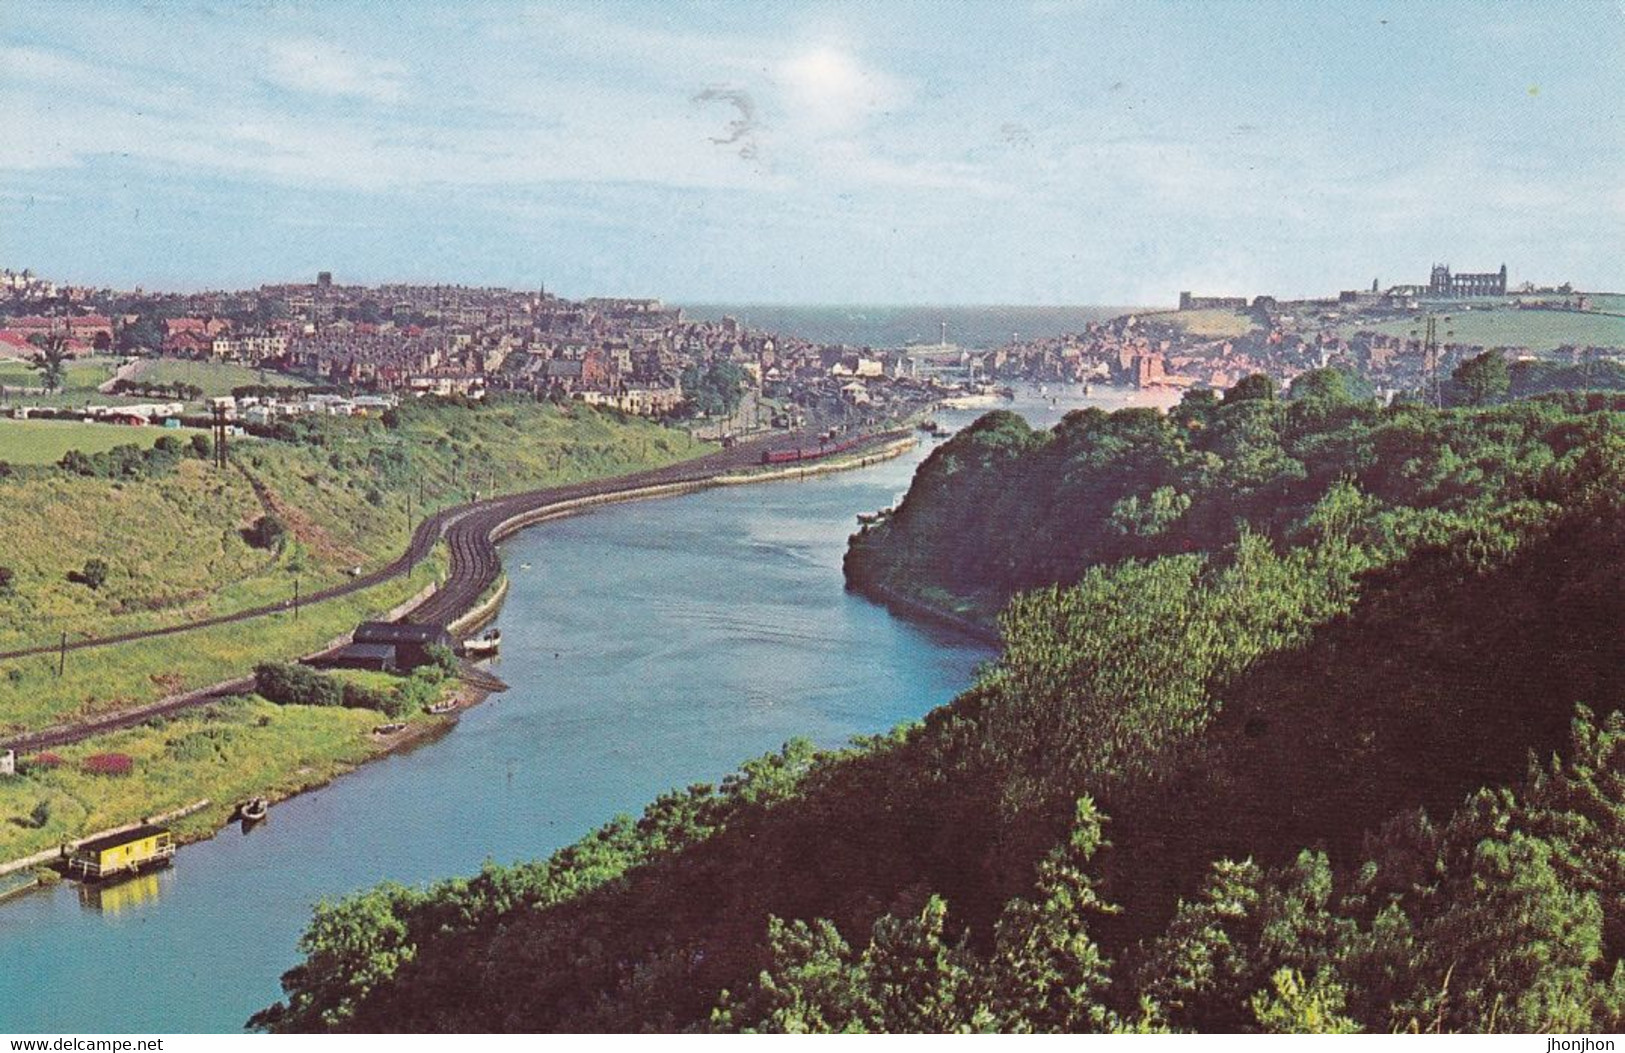 United Kingdom/England - Postcard Unused - Whitby - River Esk - Whitby